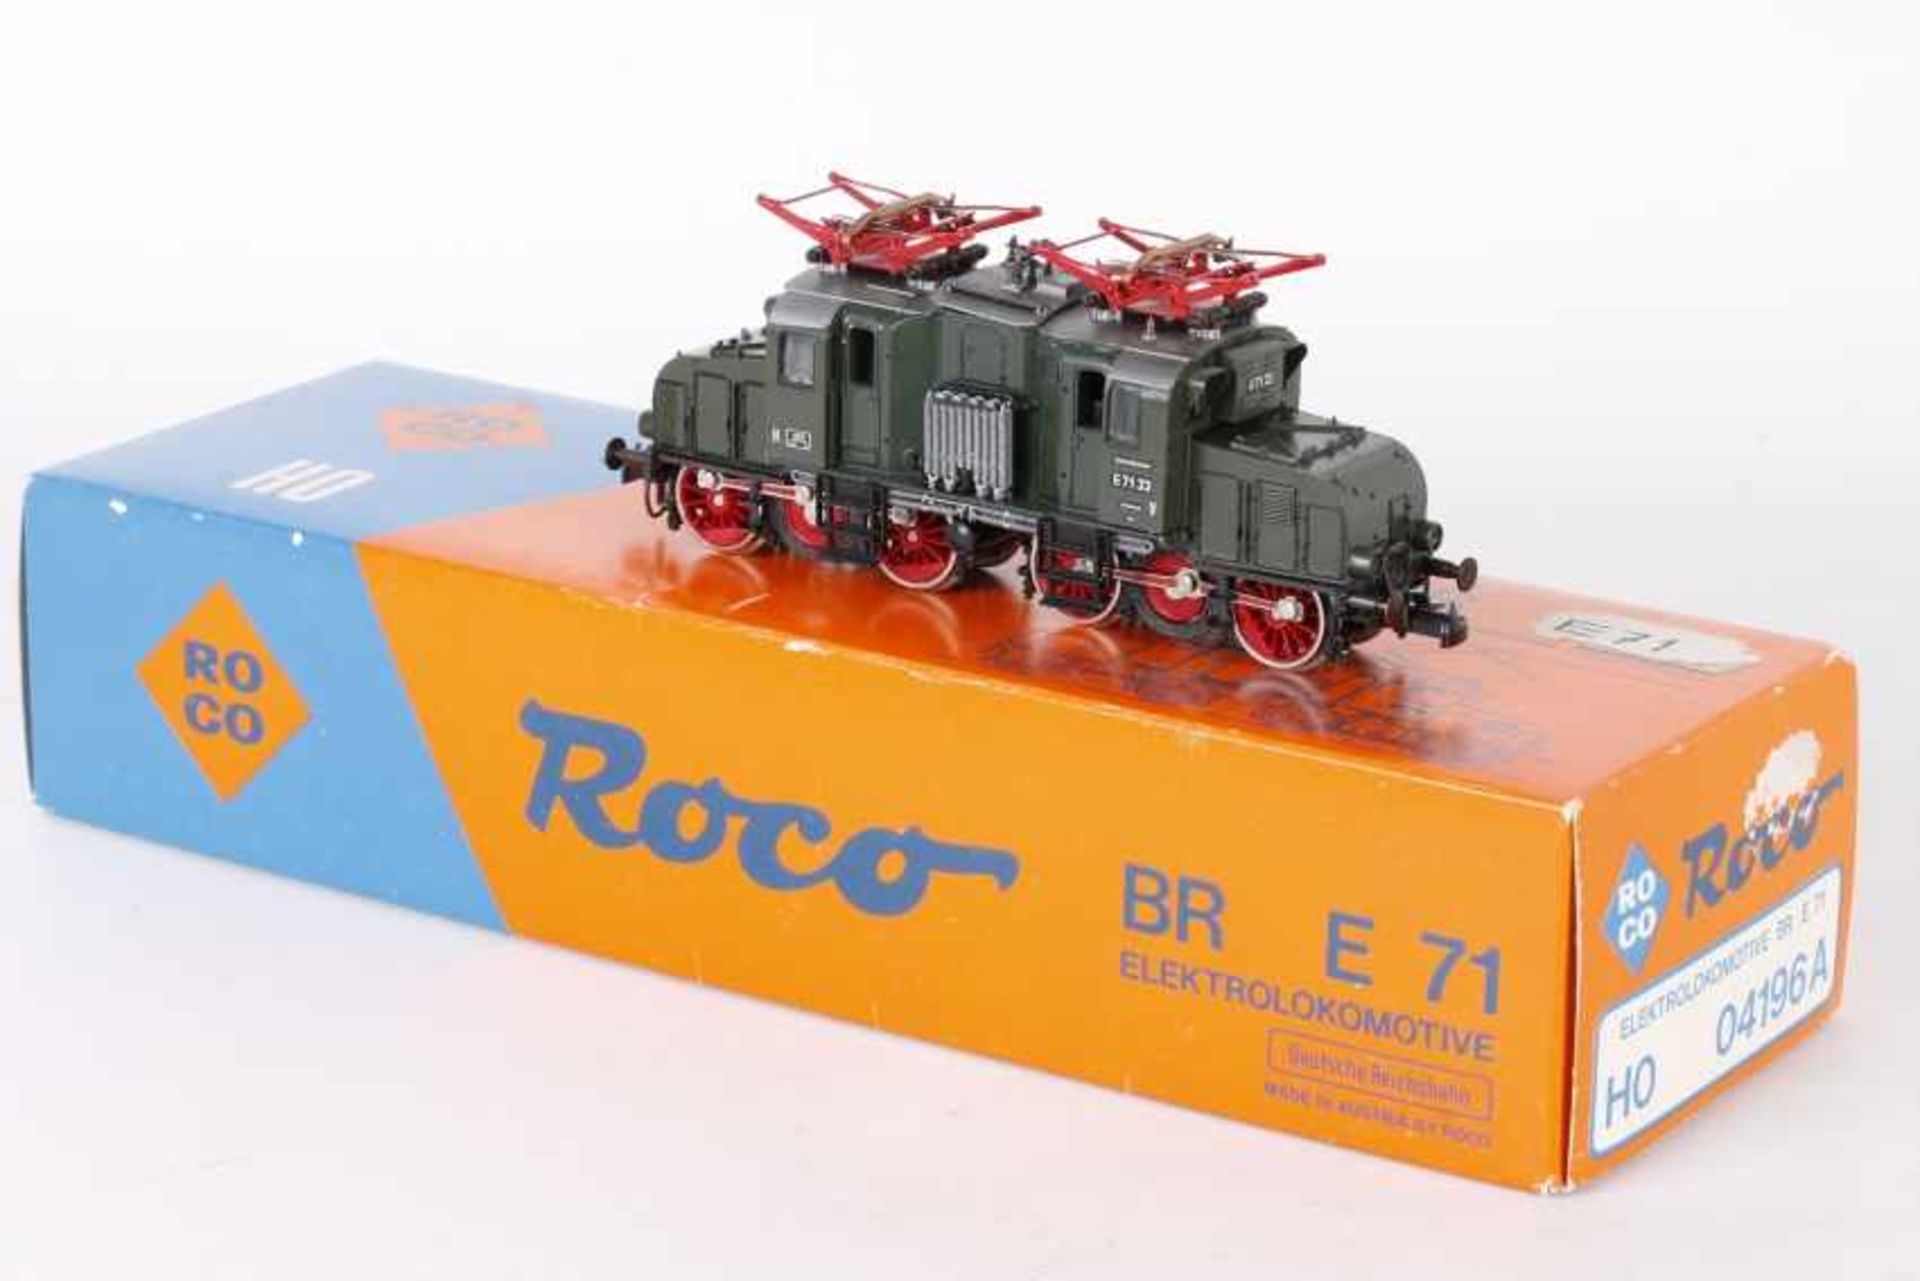 Roco 43514, Elektrolok "E 71 33" der DRGRoco 43514, Elektrolok "E 71 33" der DRG, umgebaut mit